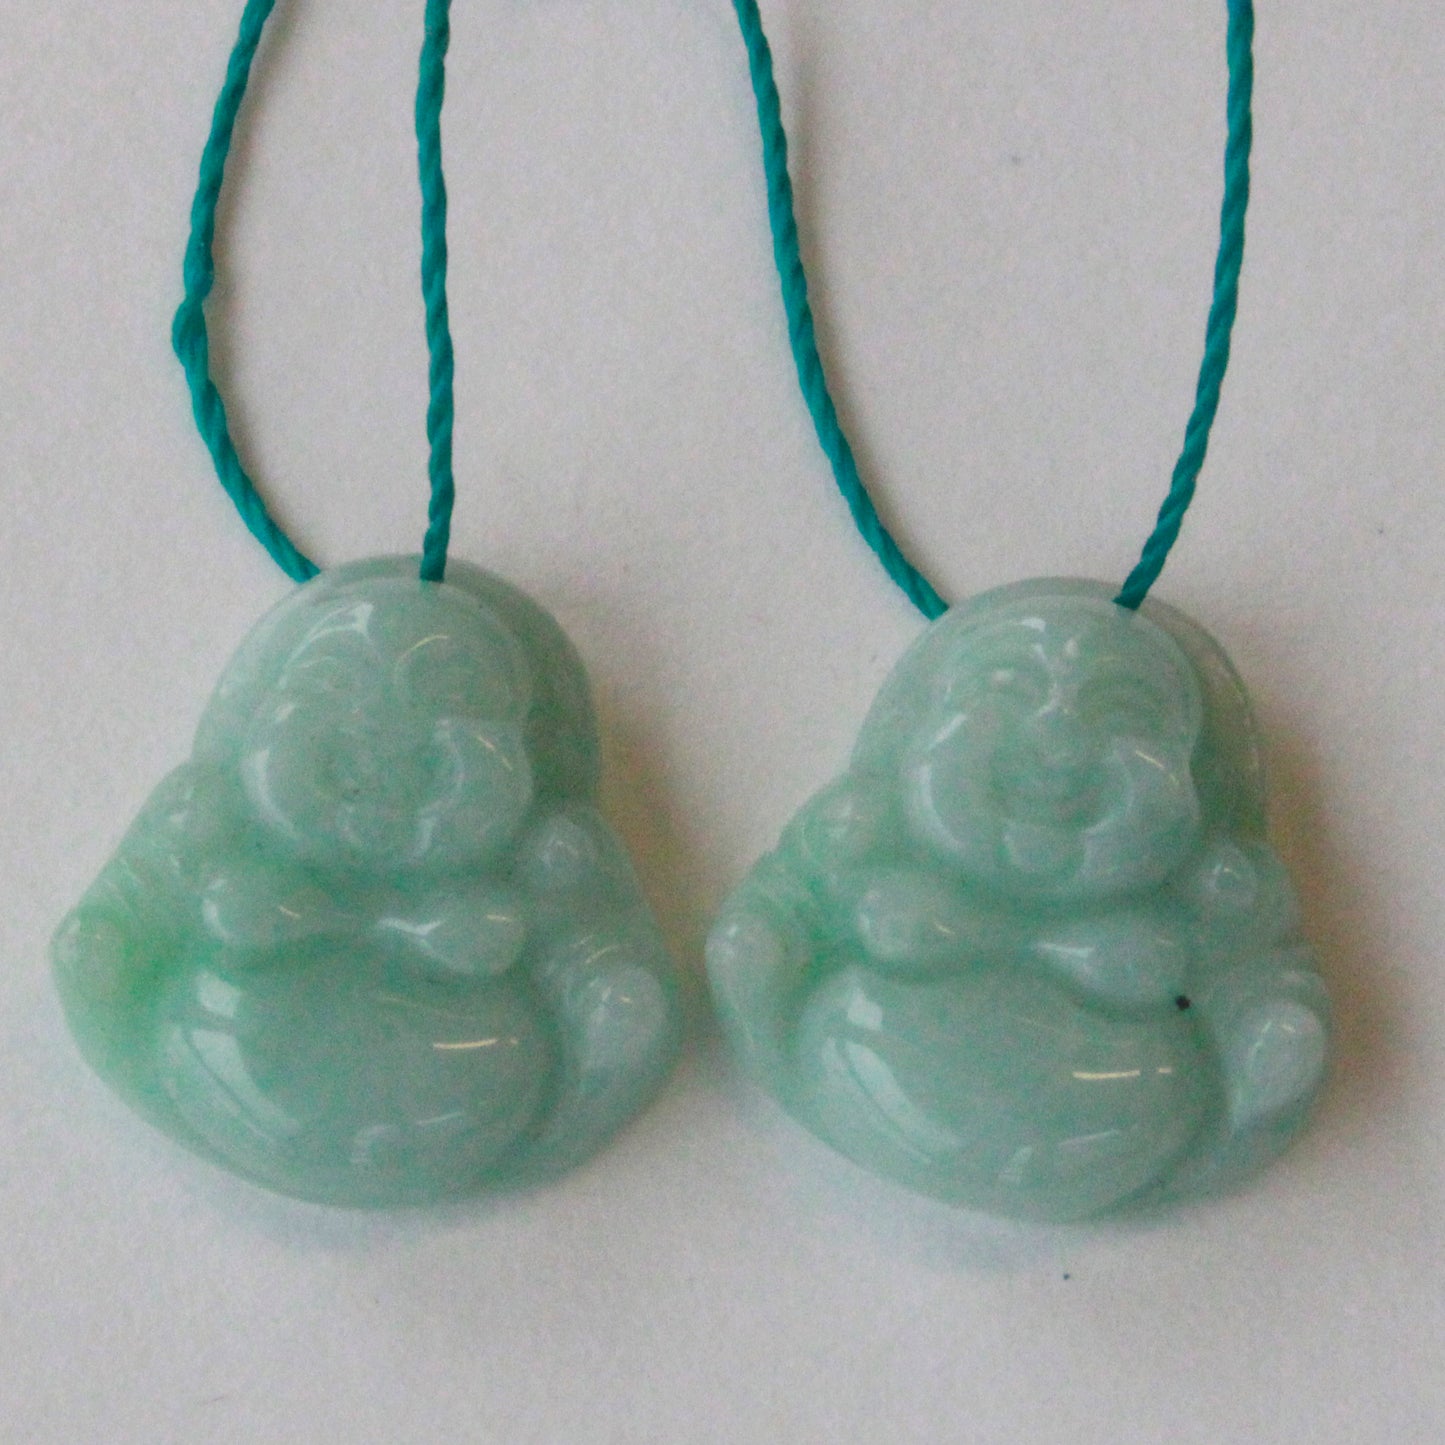 Load image into Gallery viewer, Carved Handmade Buddha Pendant - Burma Jade - 1 Piece
